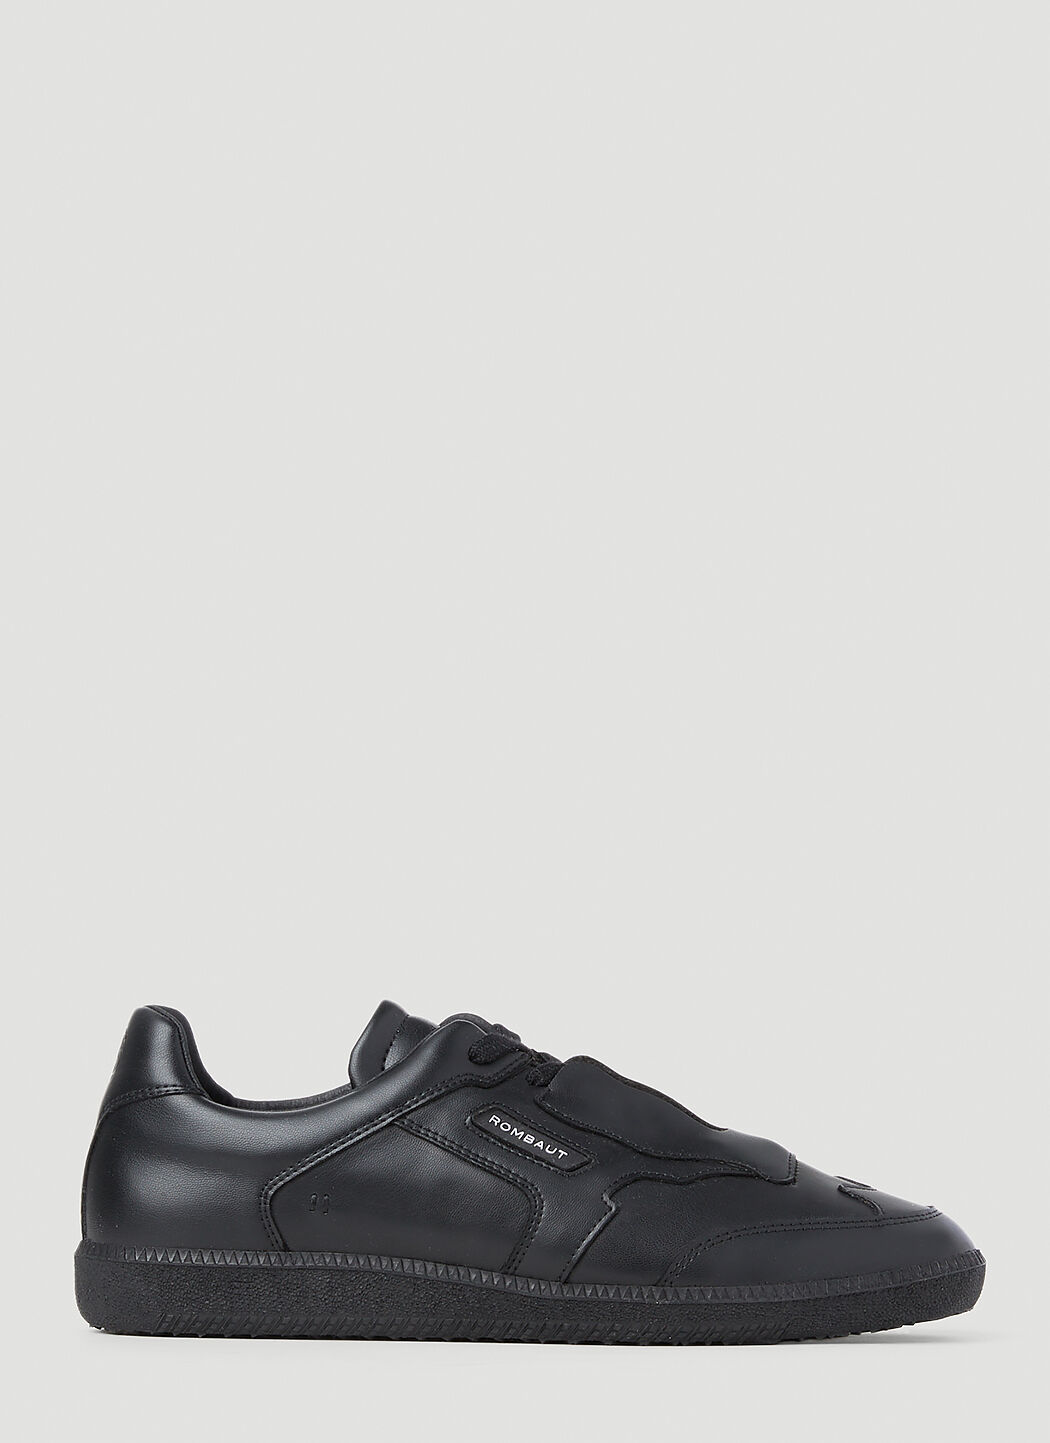 Rombaut Atmoz 运动鞋 黑色 rmb0354001